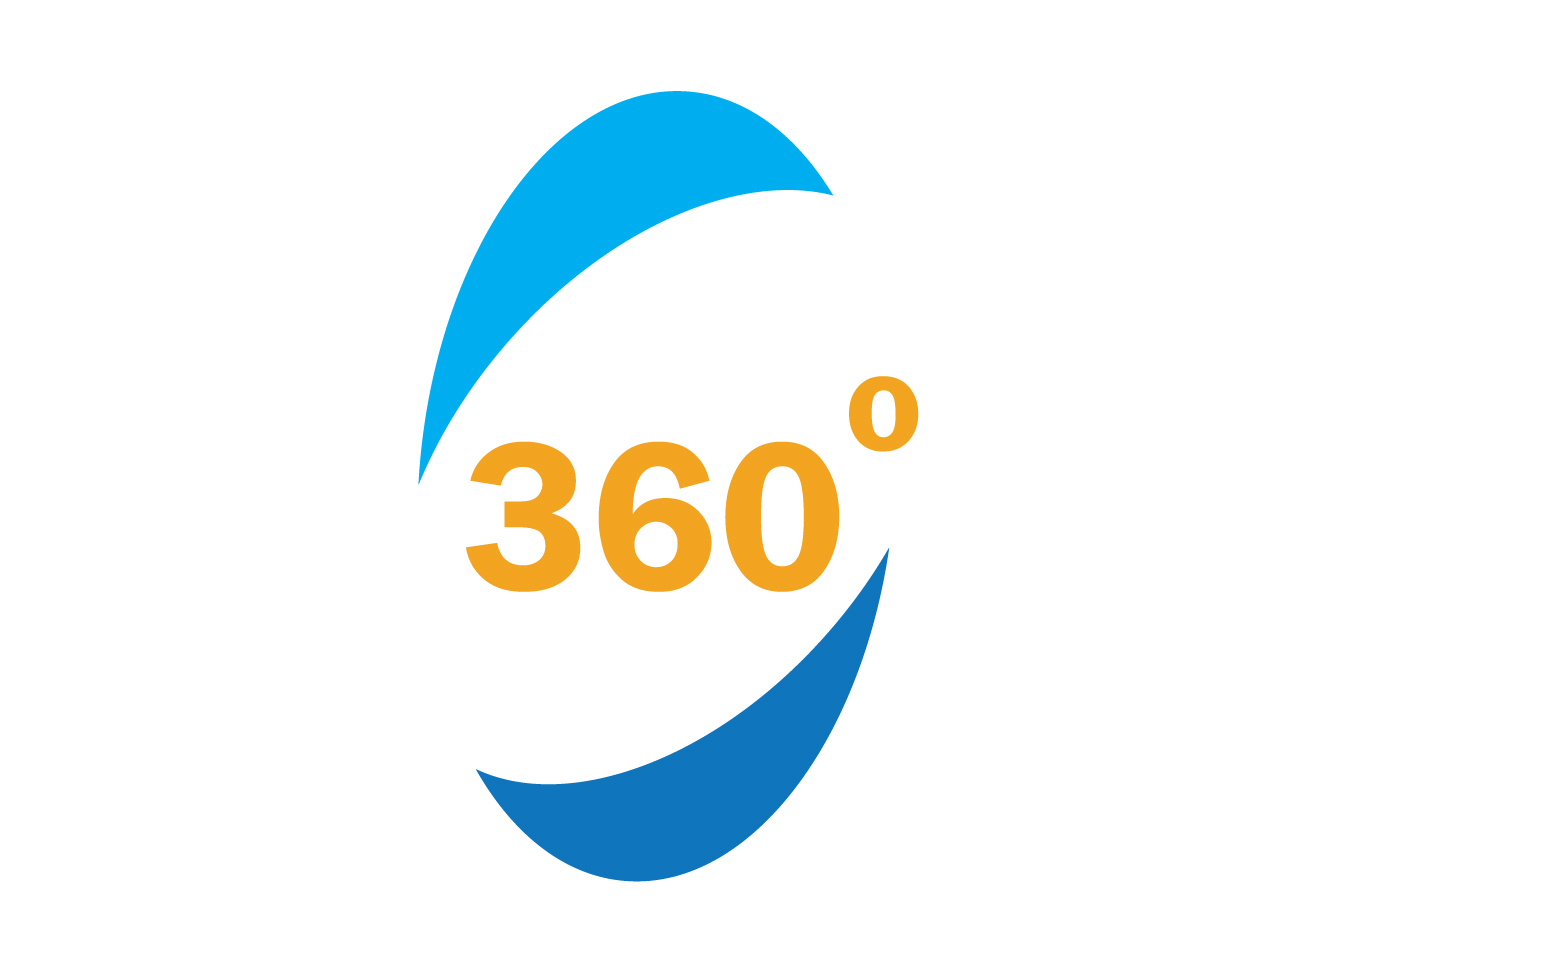 360 degree angle rotation icon symbol logo version v27